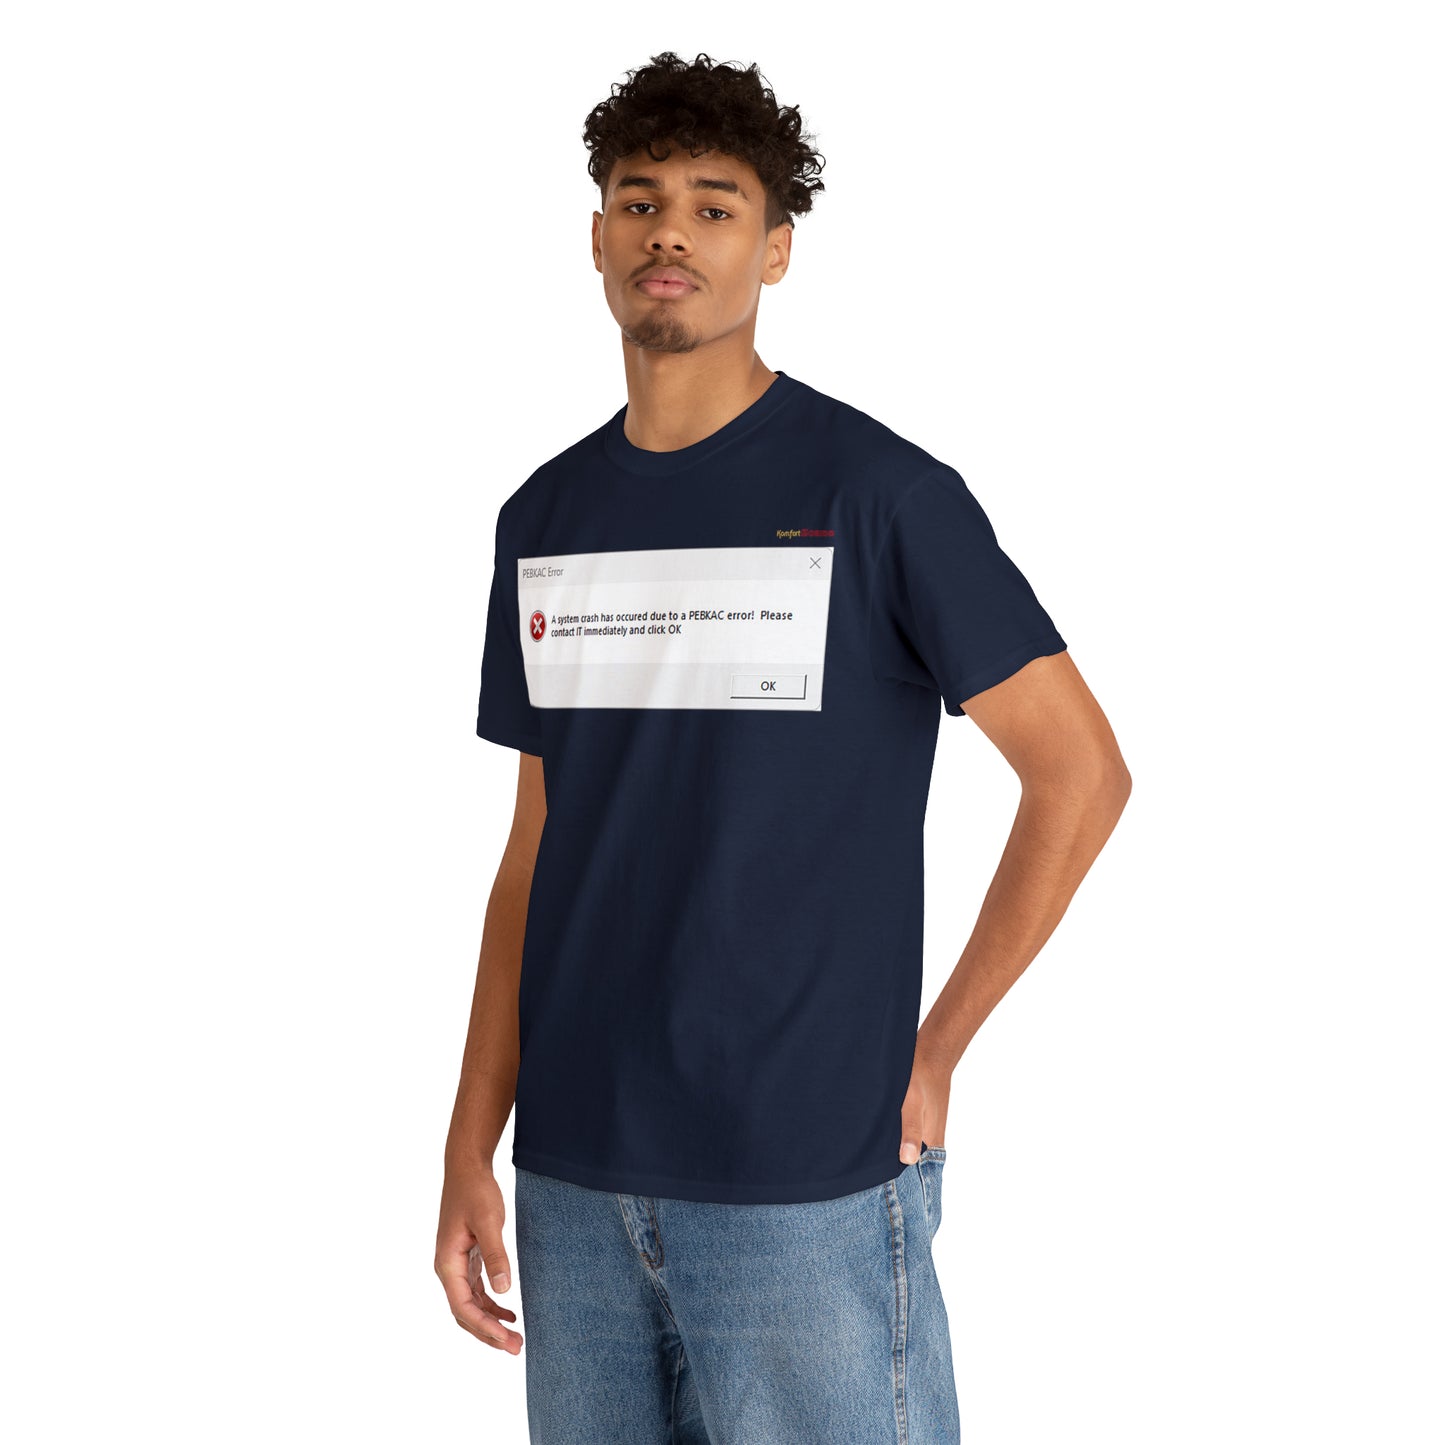 PEBKAC Error T-Shirt-1 (Tech Lovers)